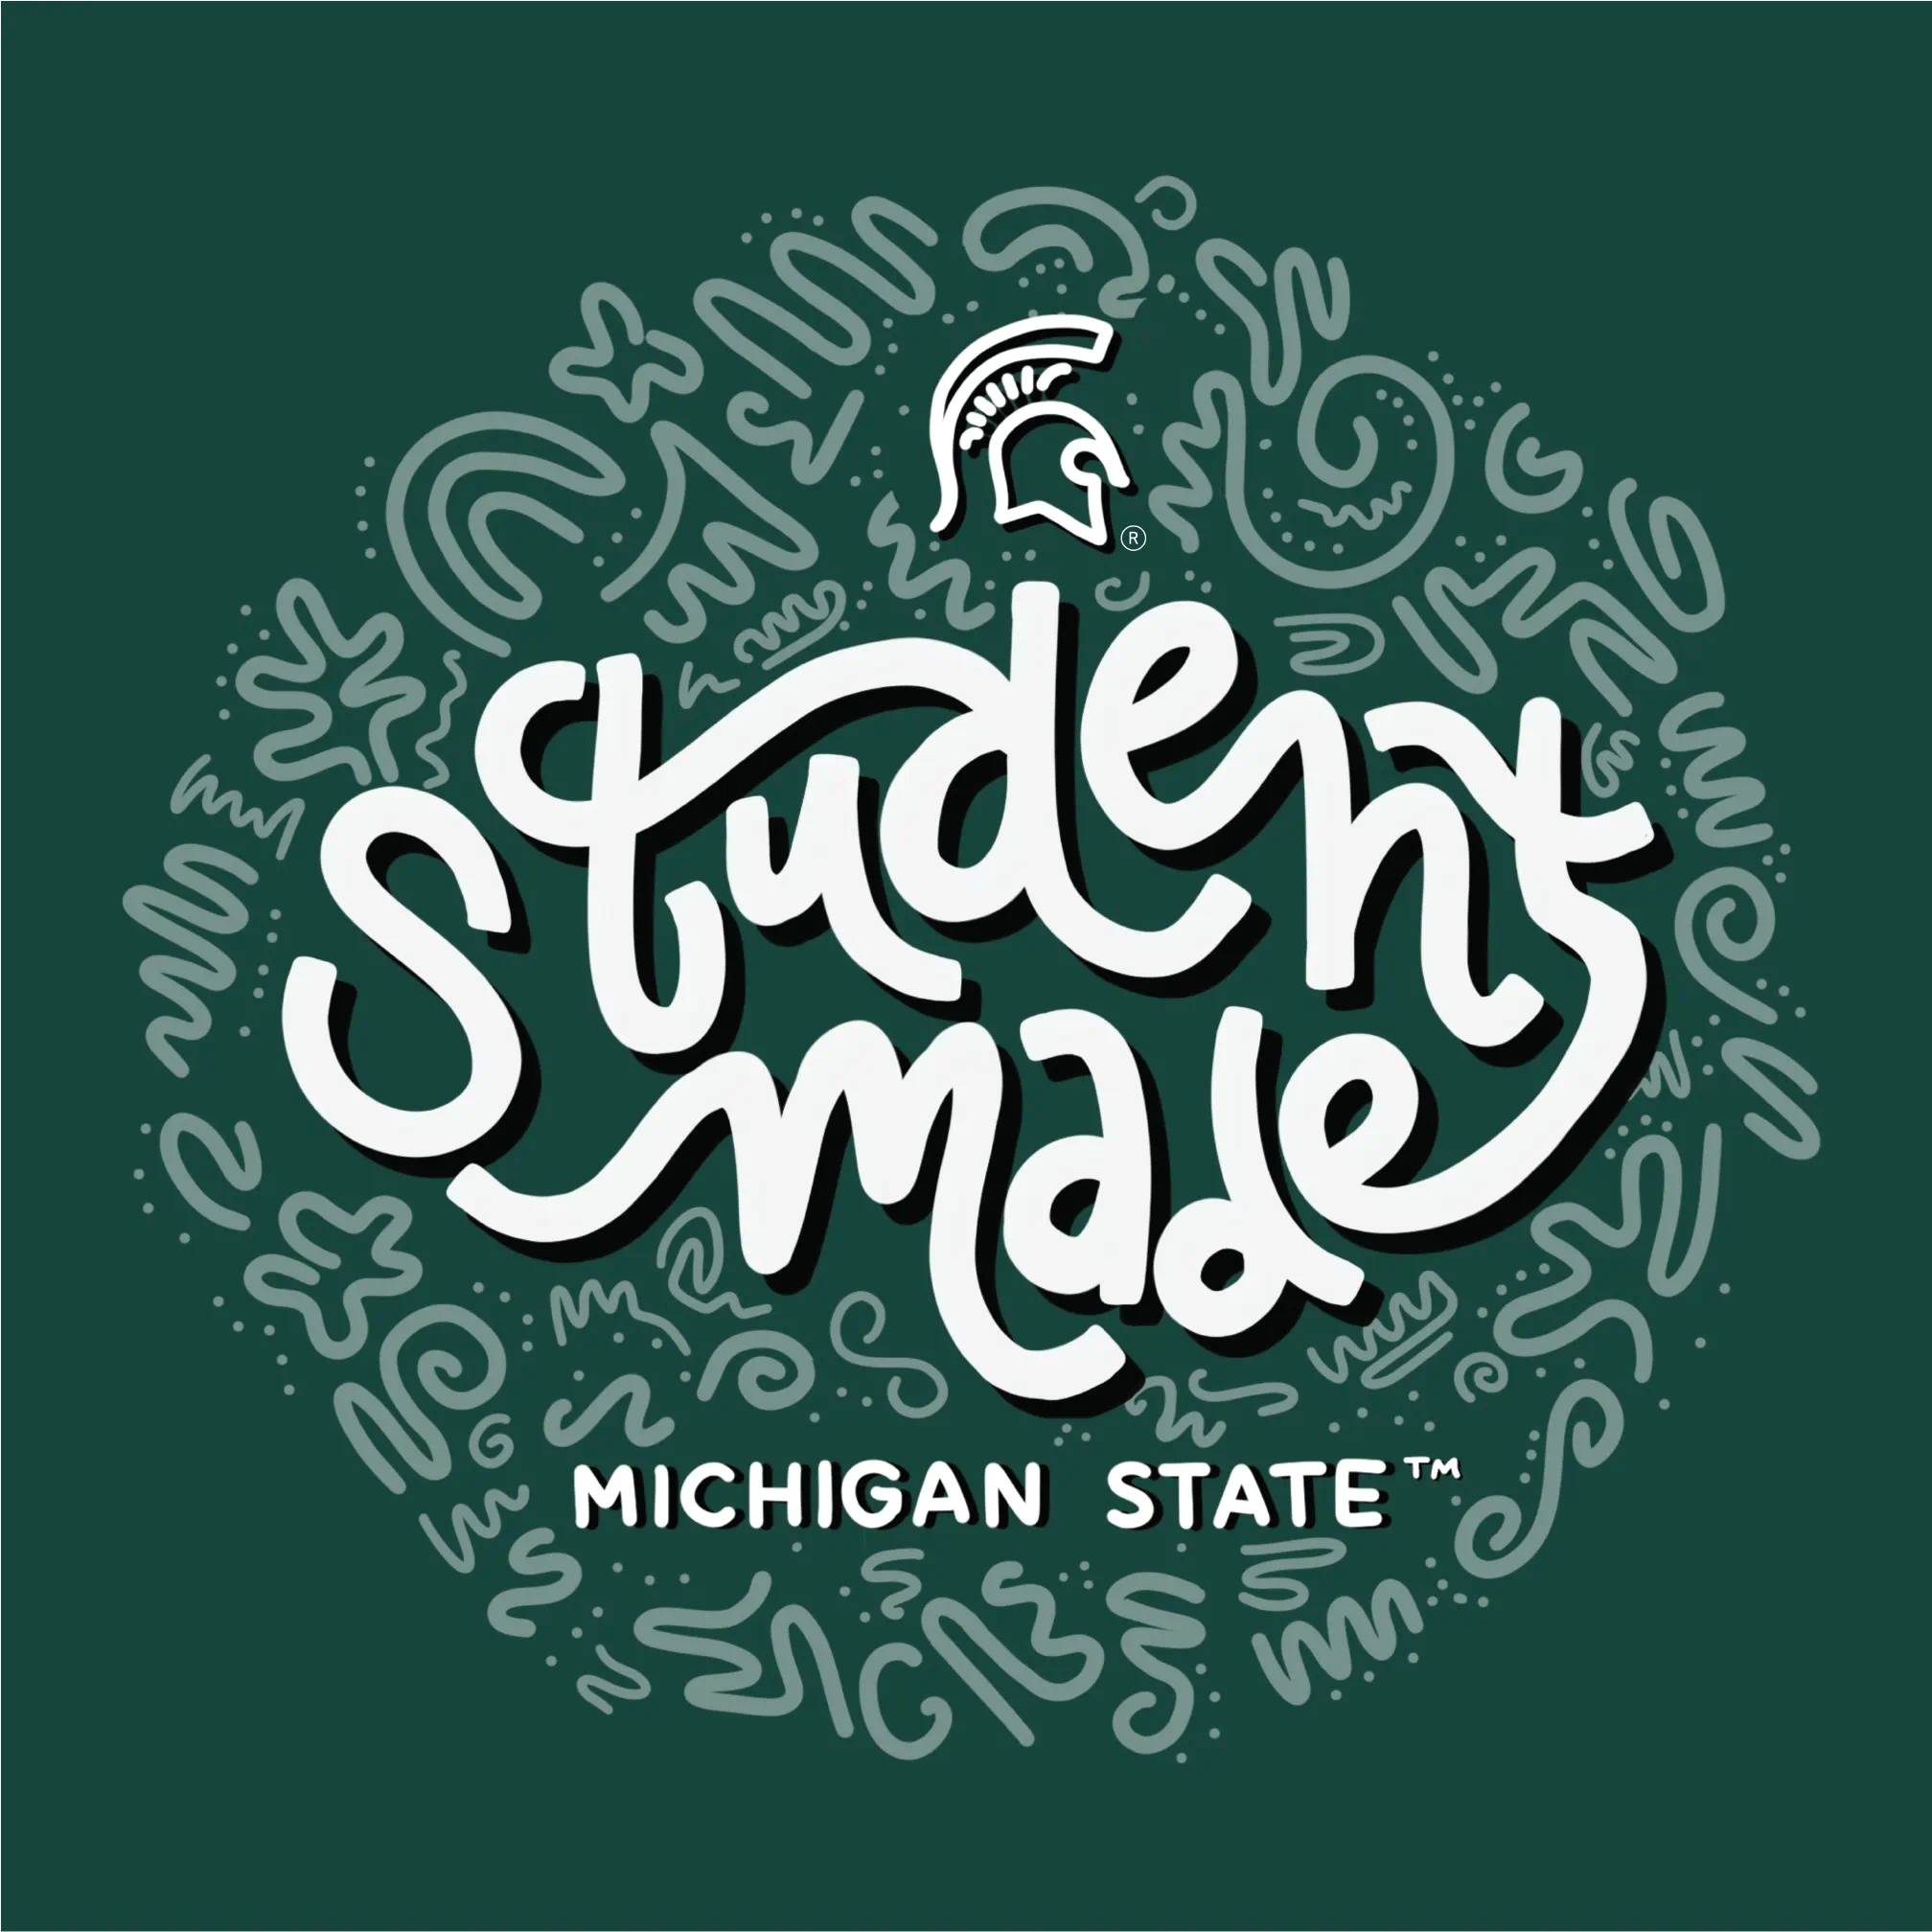 Student-Made at Michigan State University